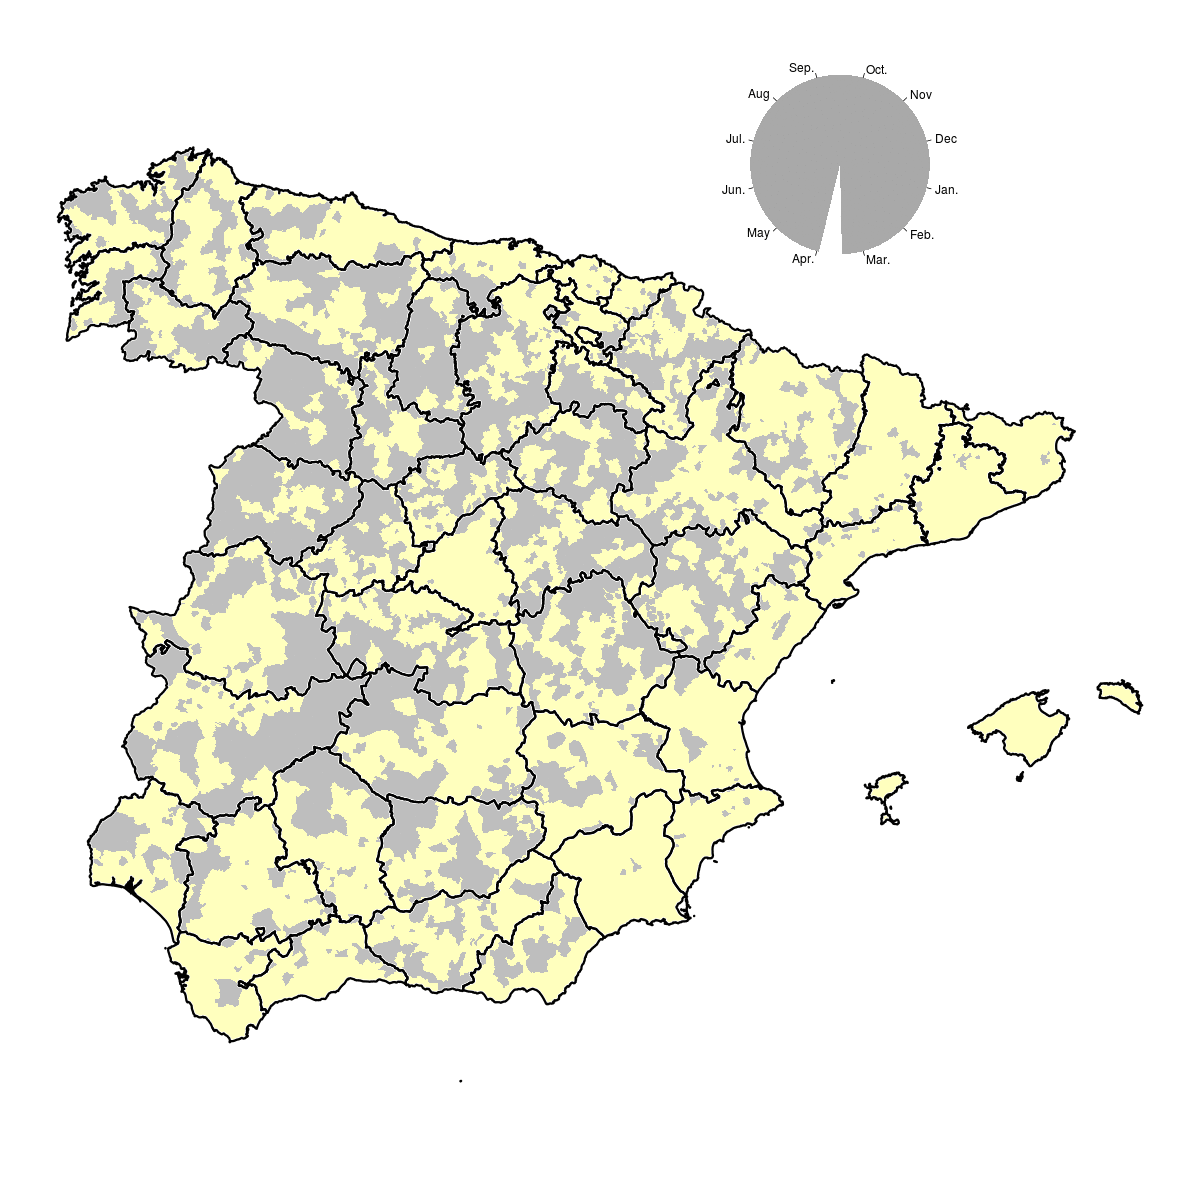 http://www.creaf.uab.cat/fotosprensa/Probabilidades_avisos_mosquitotigre_España.gif